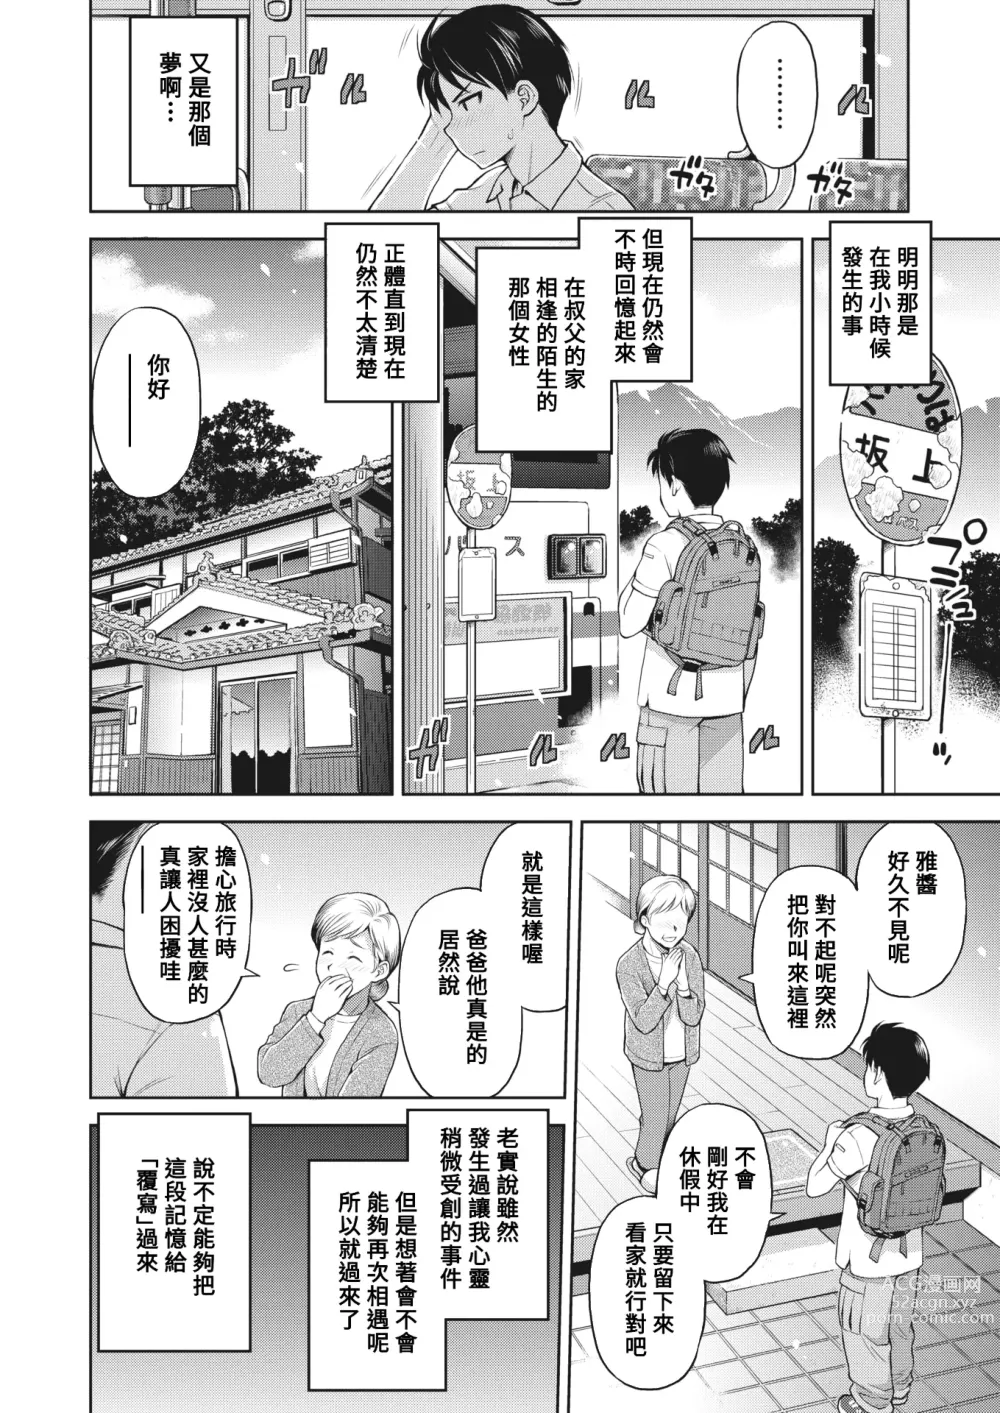 Page 4 of manga Oshiire Kaikitan